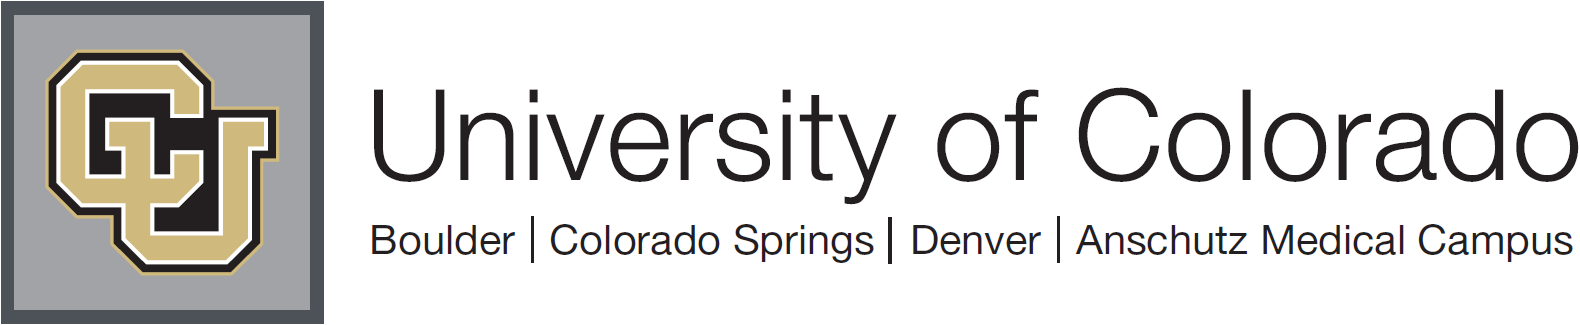 University_of_Colorado_2011.png